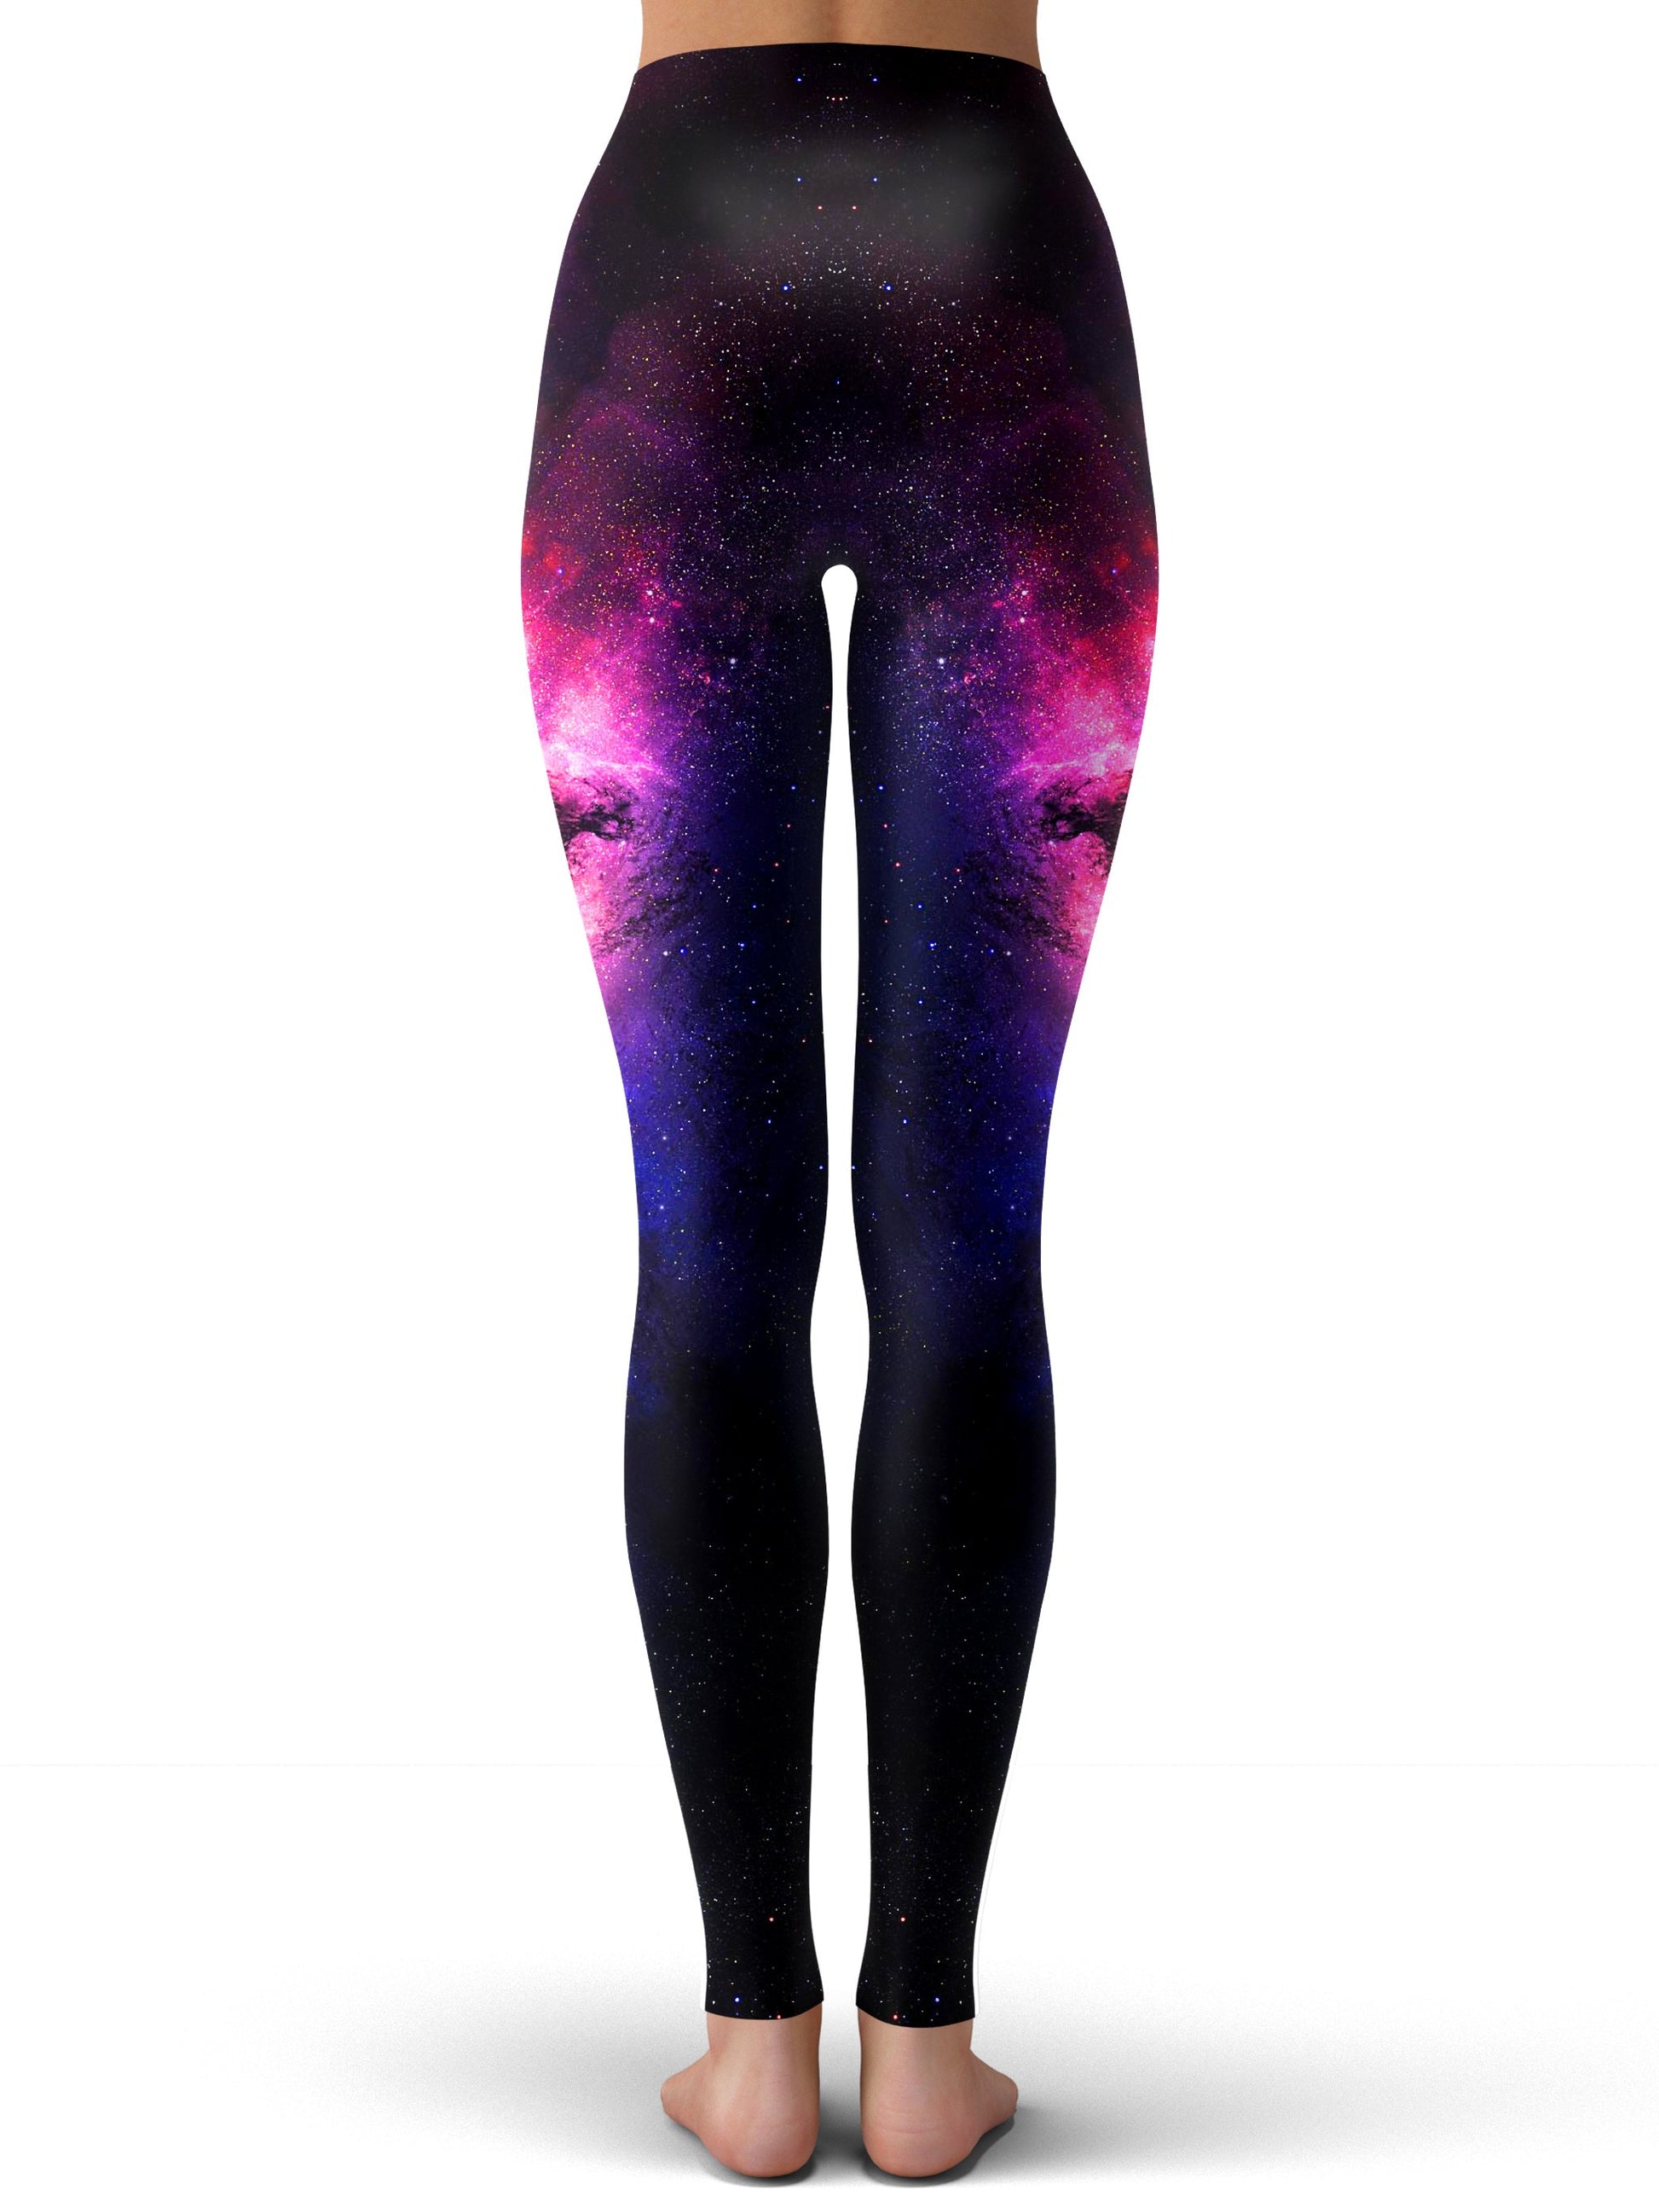 Purple Galactic Print Leggings Women Adult Halloween Costume - XS